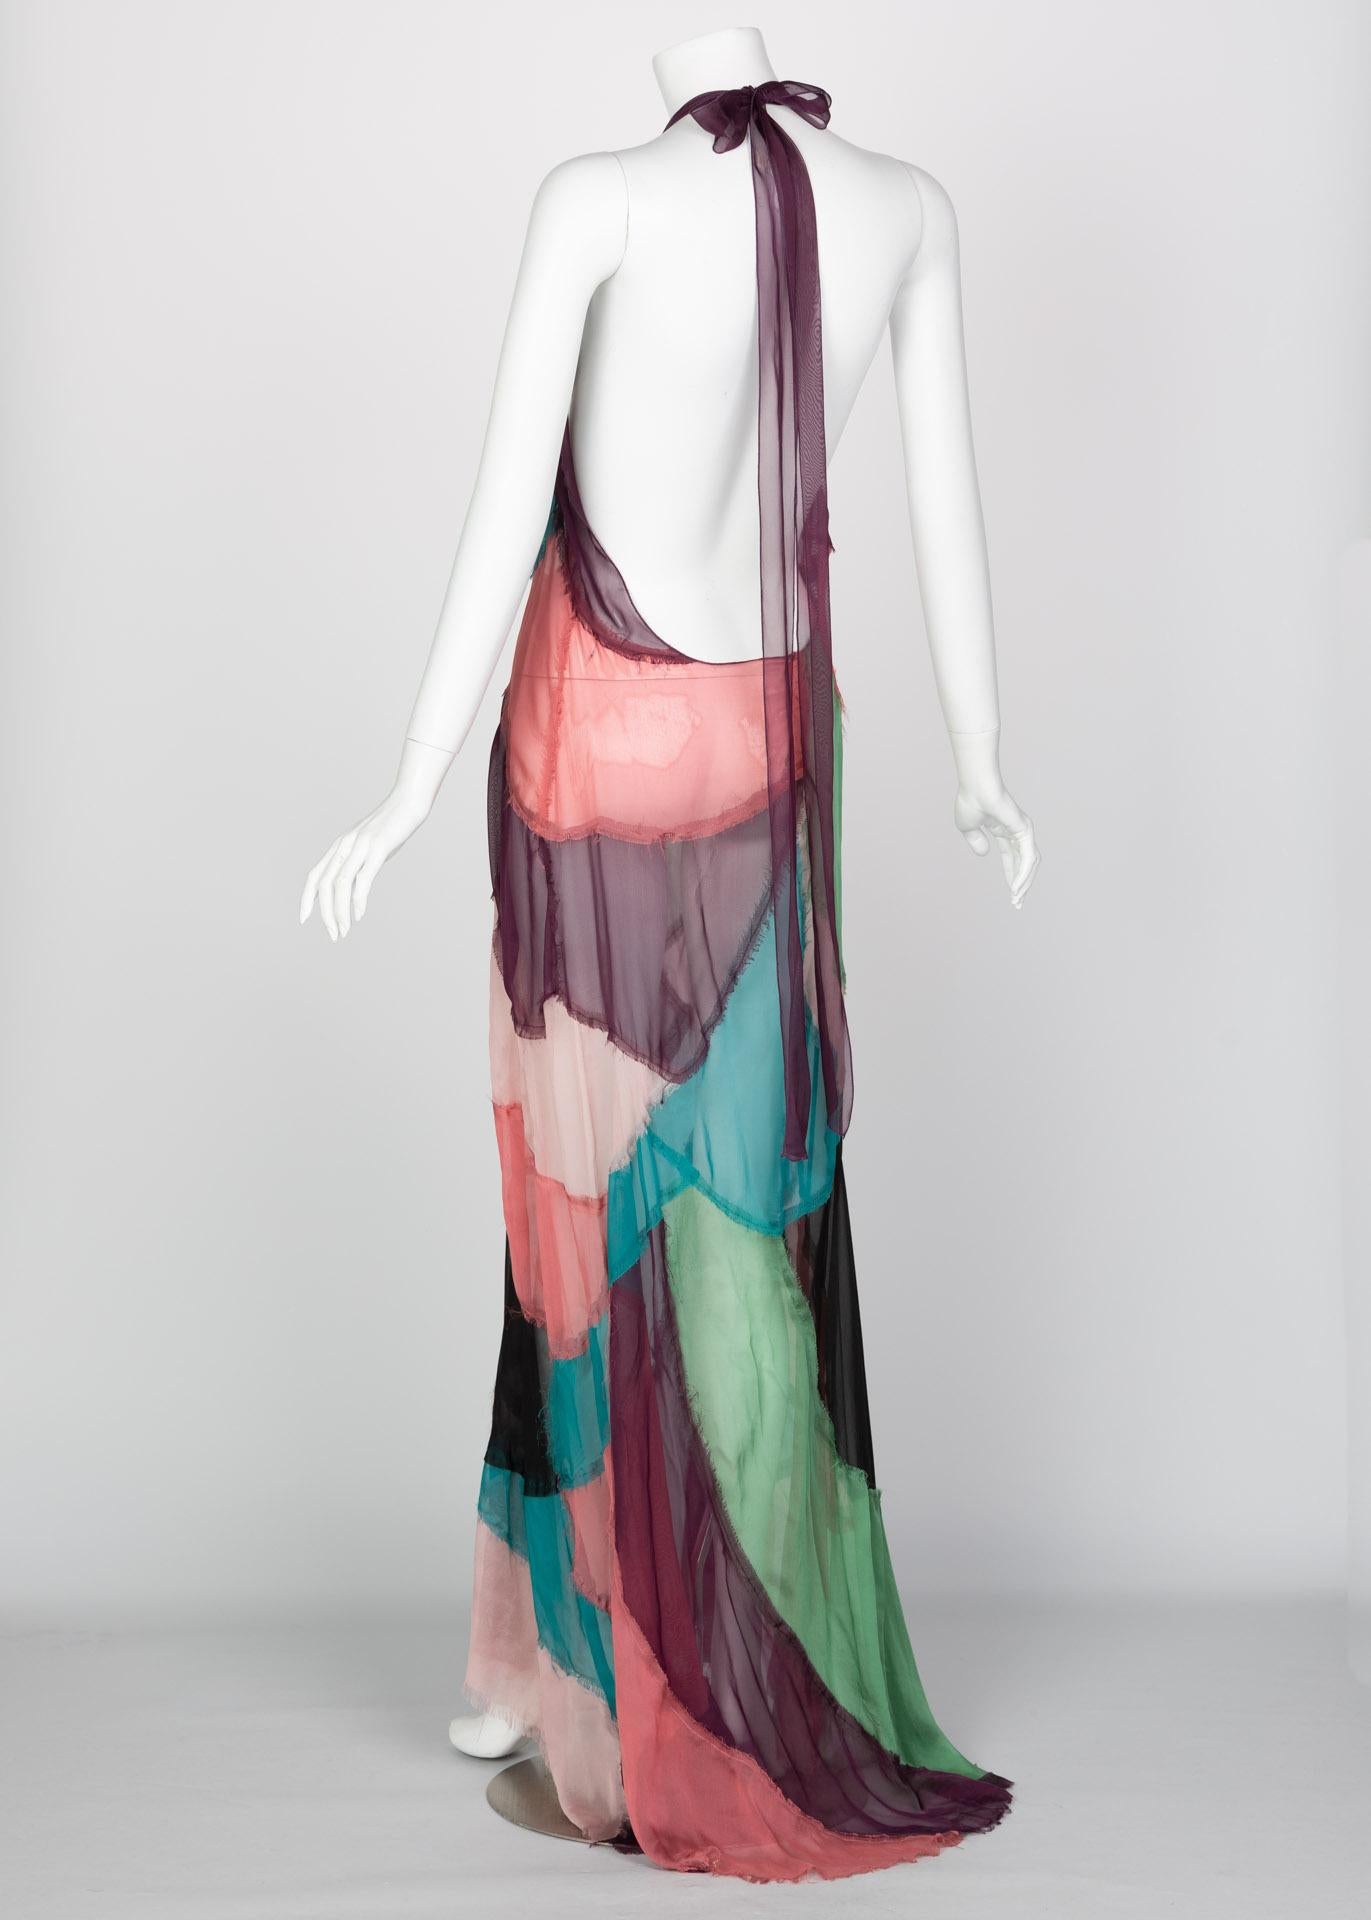 Gray Alberta Ferretti Silk Chiffon Patchwork Open back Halter Gown, 2005